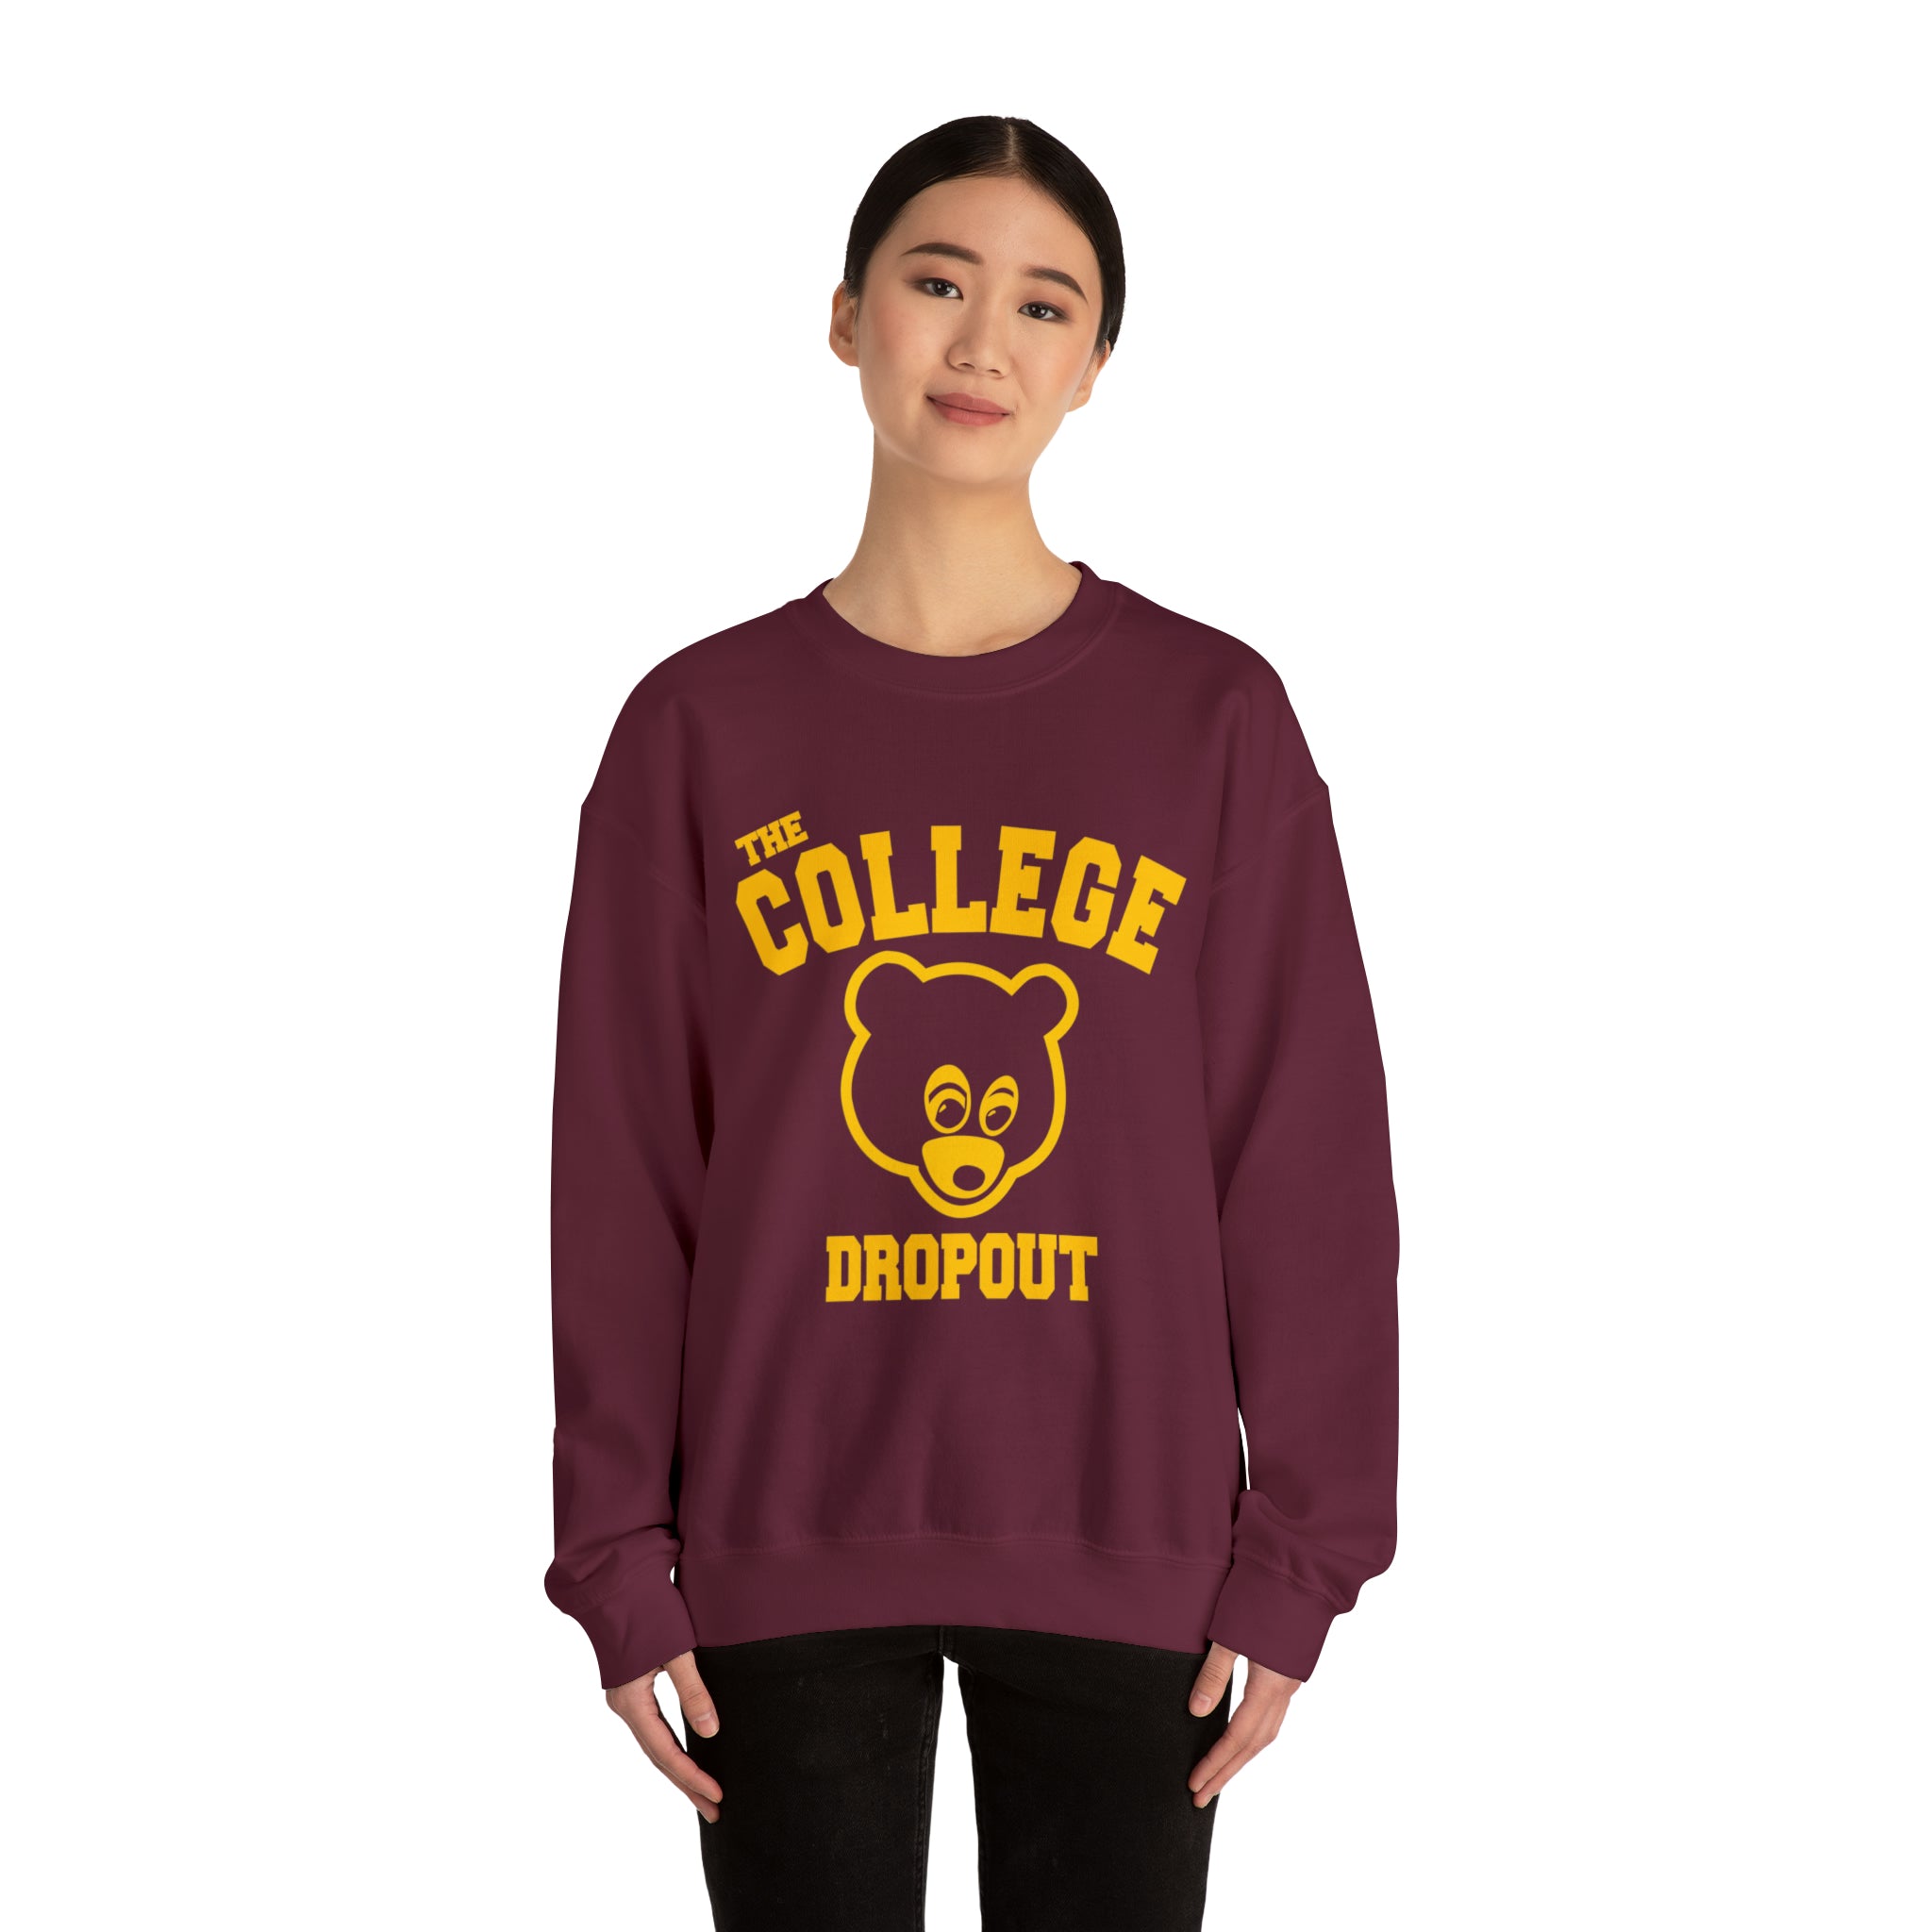 The College Dropout Crewneck Sweatshirt - Old Kanye West